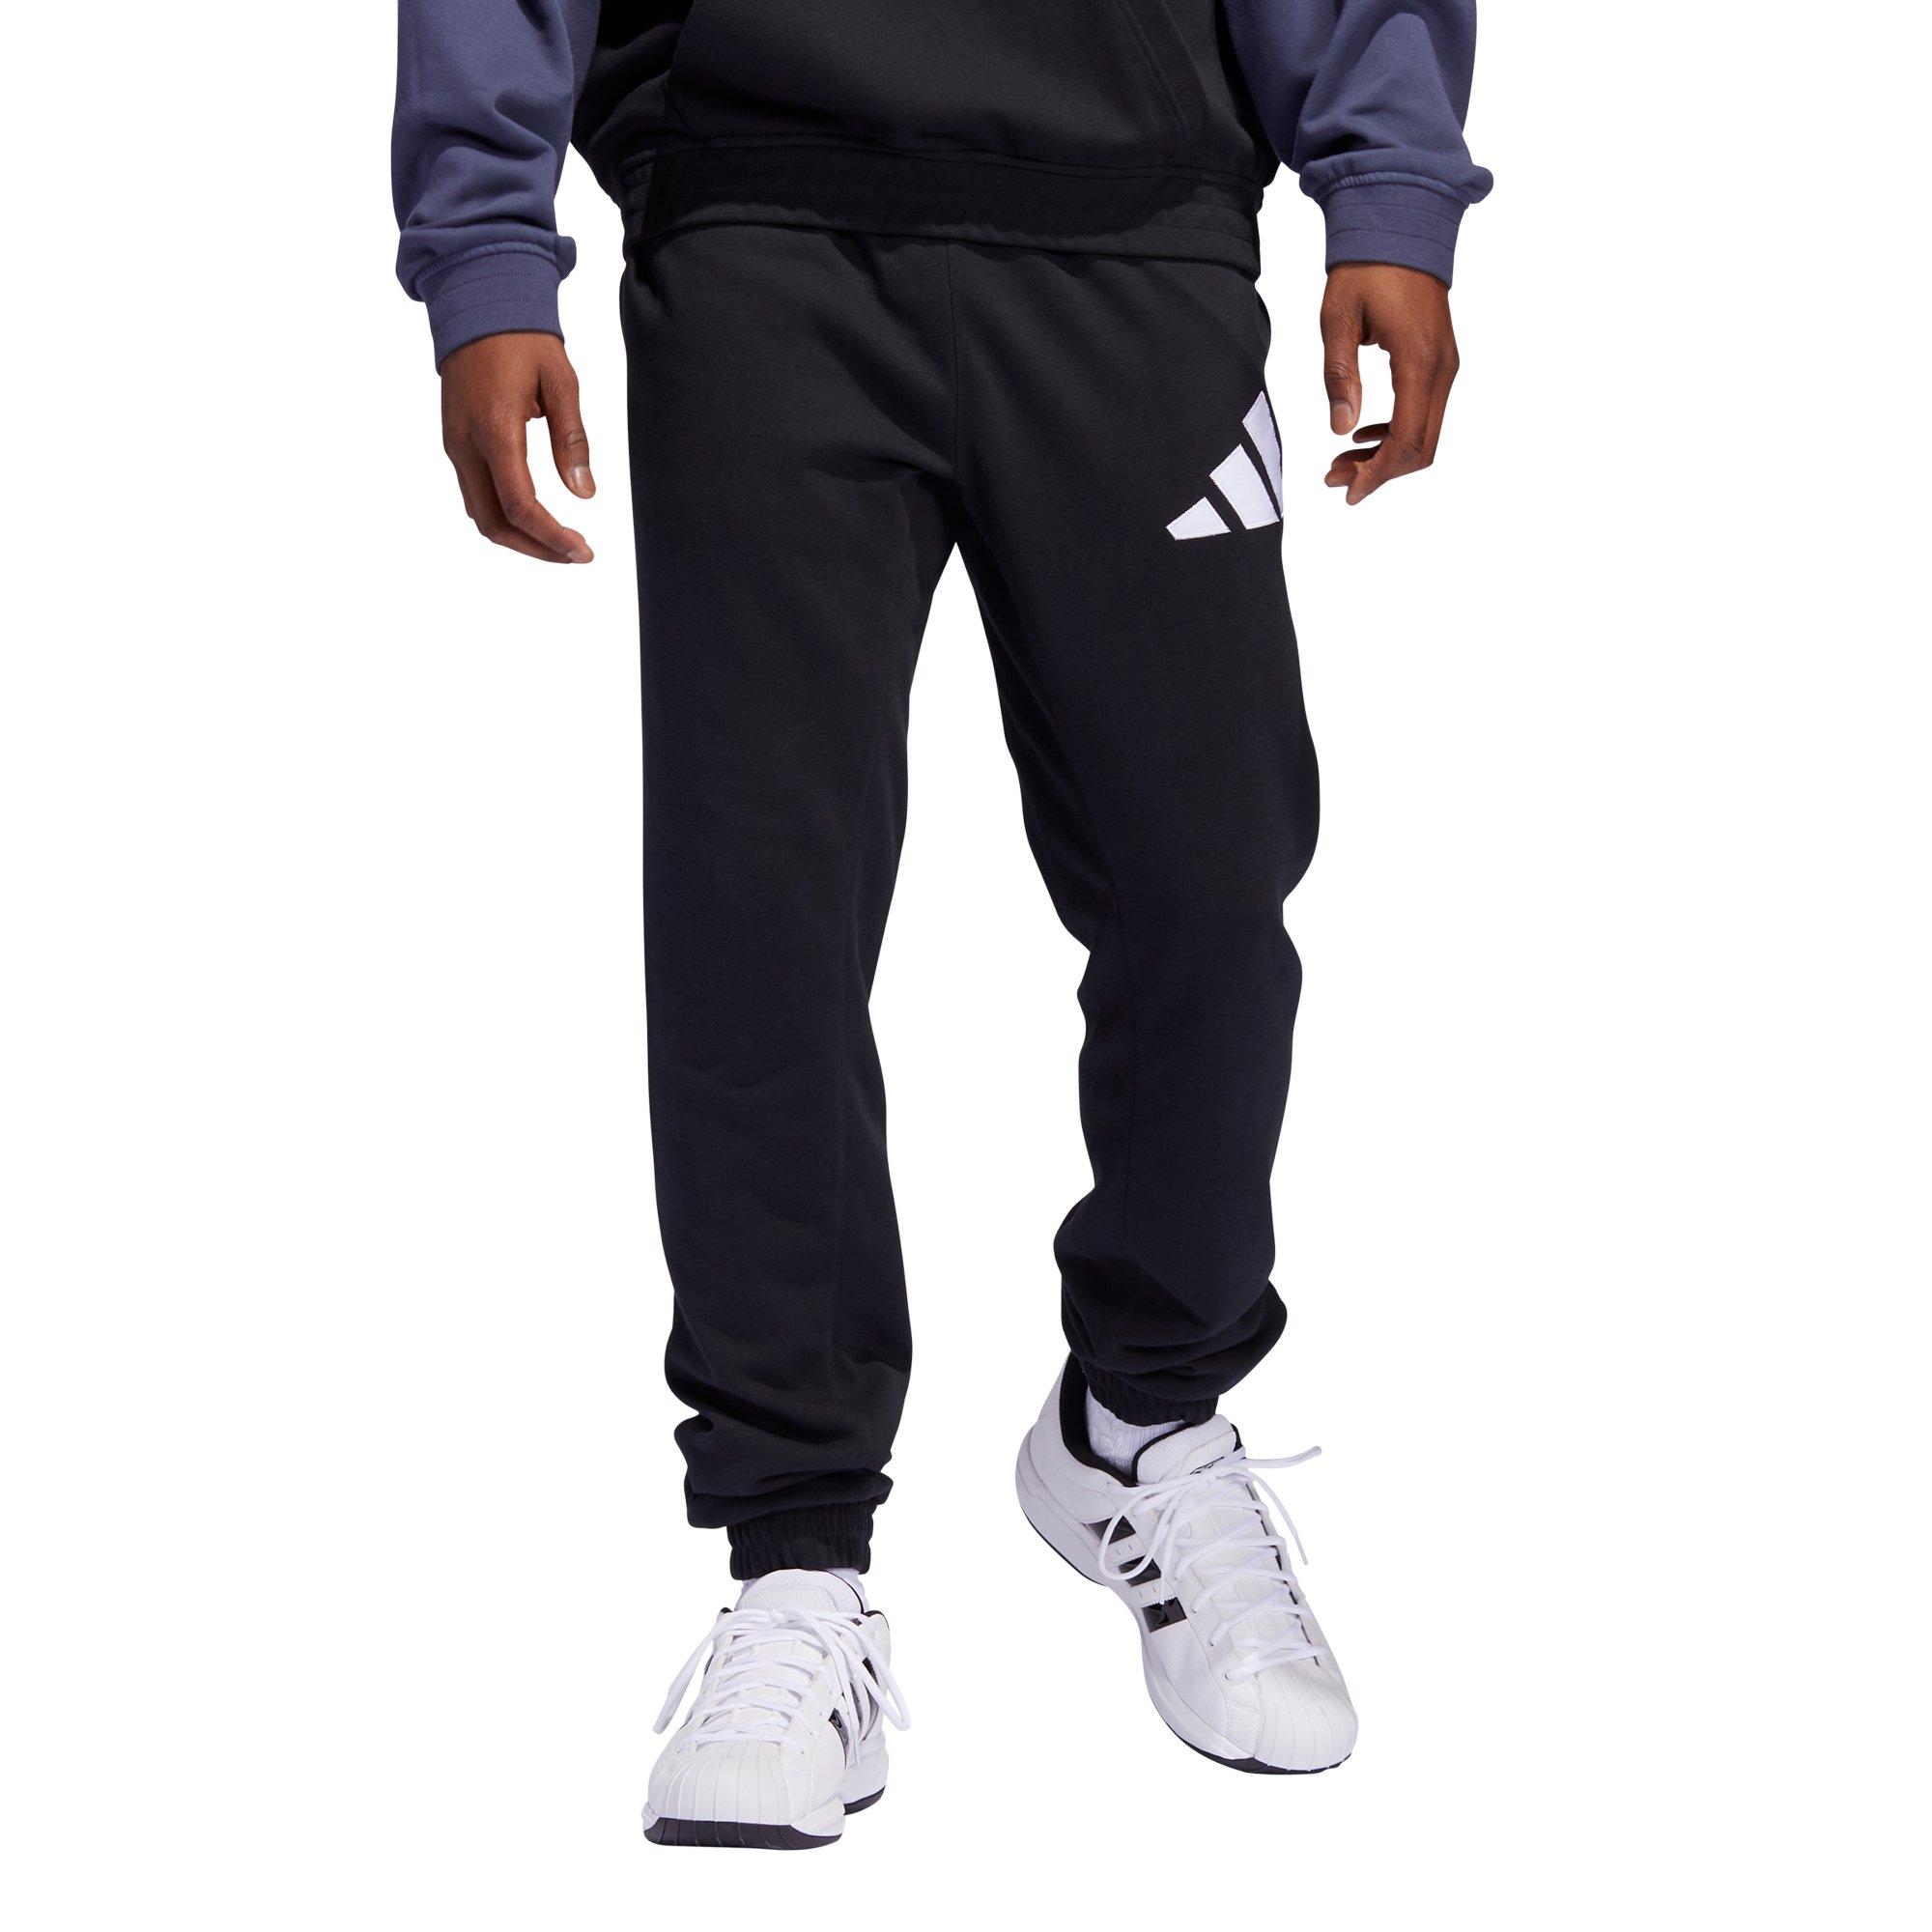 adidas Men's AEROREADY Legends Basketball Pants - Black